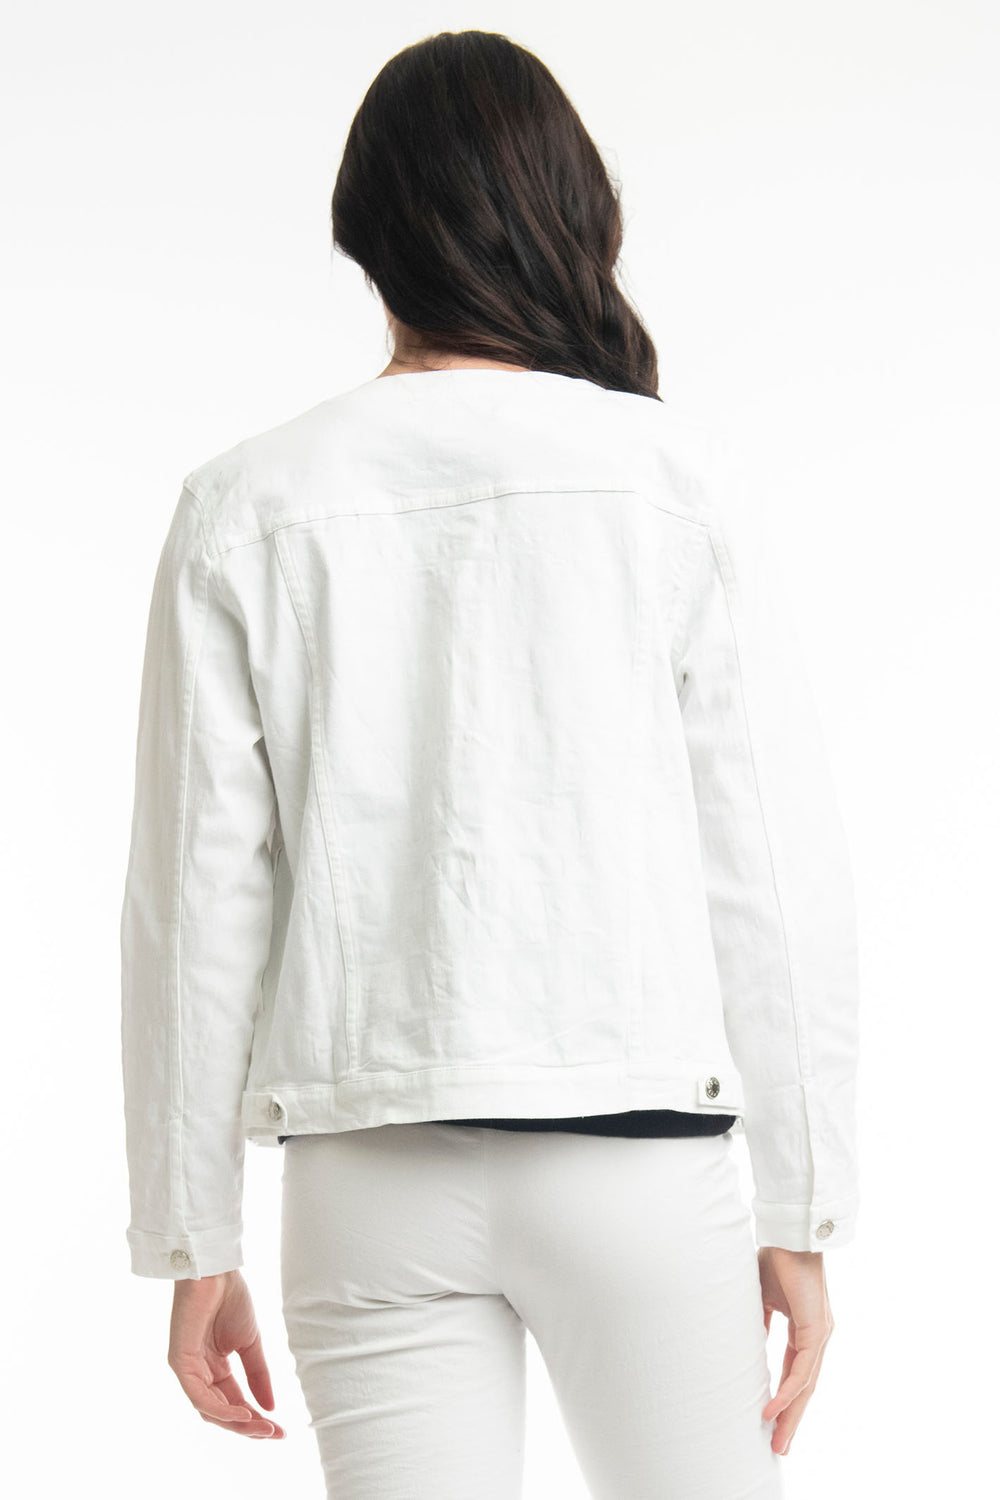 Orientique 22882 Off White Collarless Denim Jacket - Experience Boutique